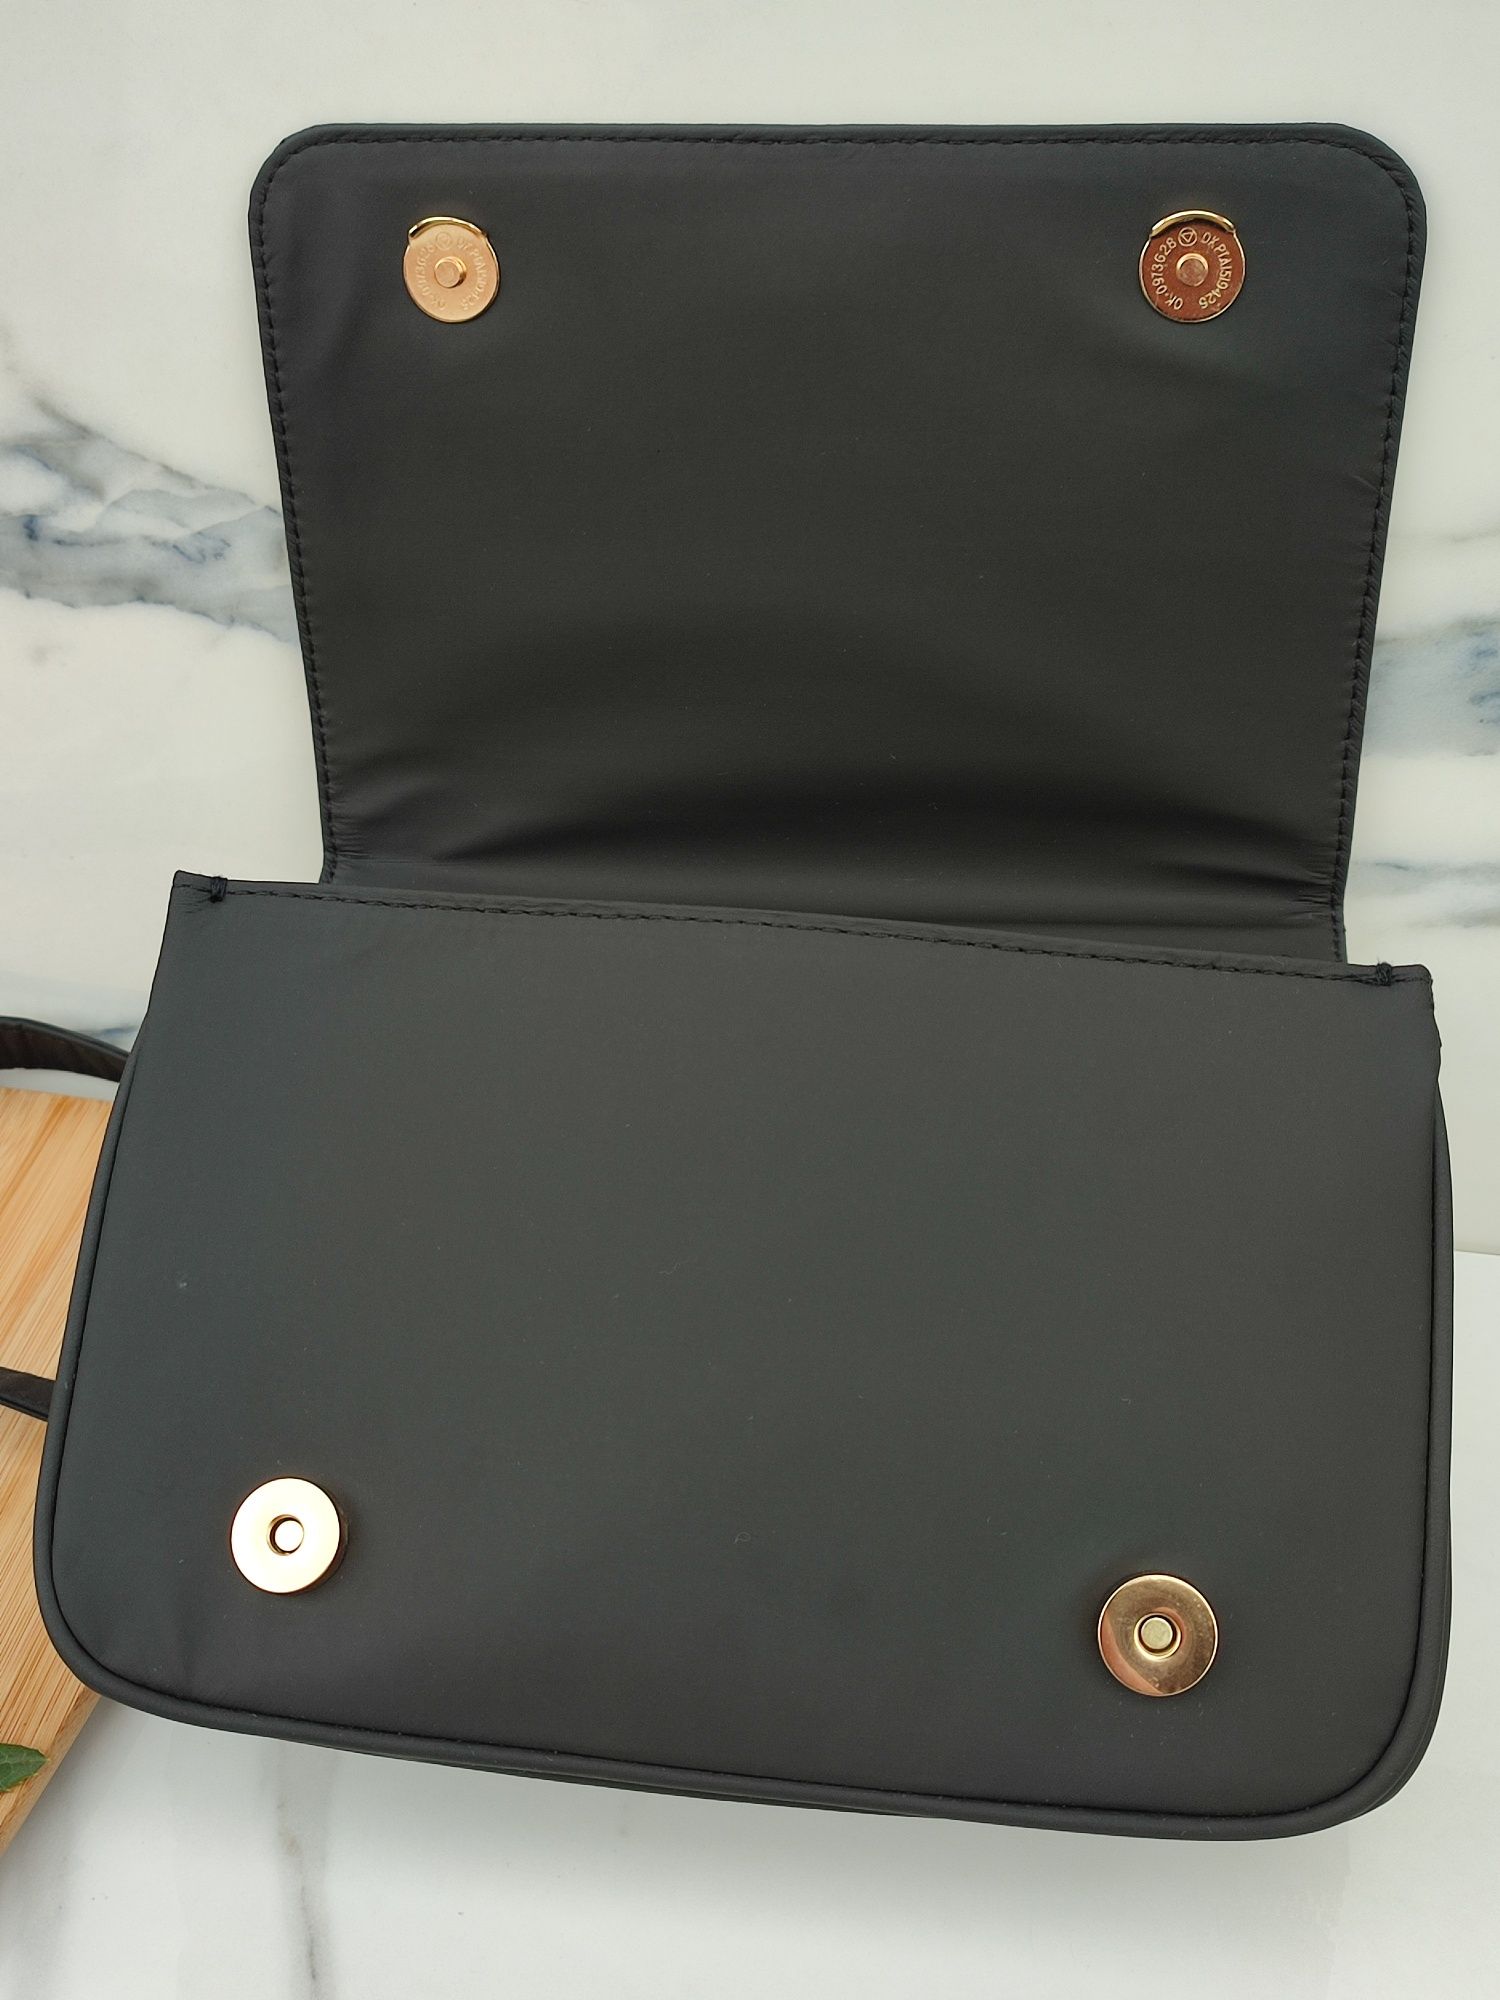 Розкішна сумка через плече Versace, сумочка-гаманець, чорно-золот